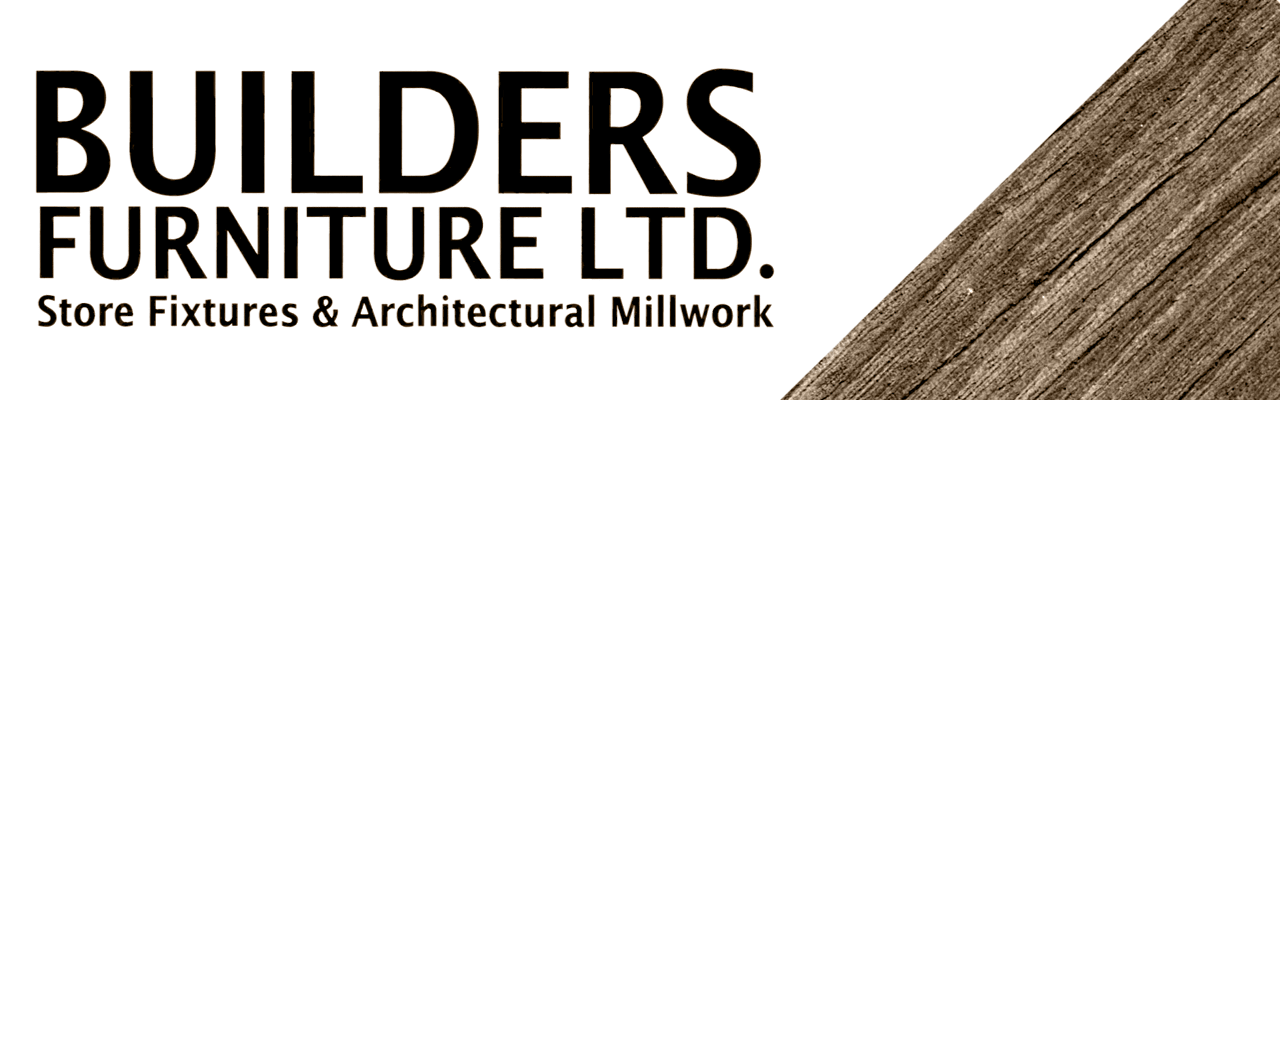 Builders Furniture